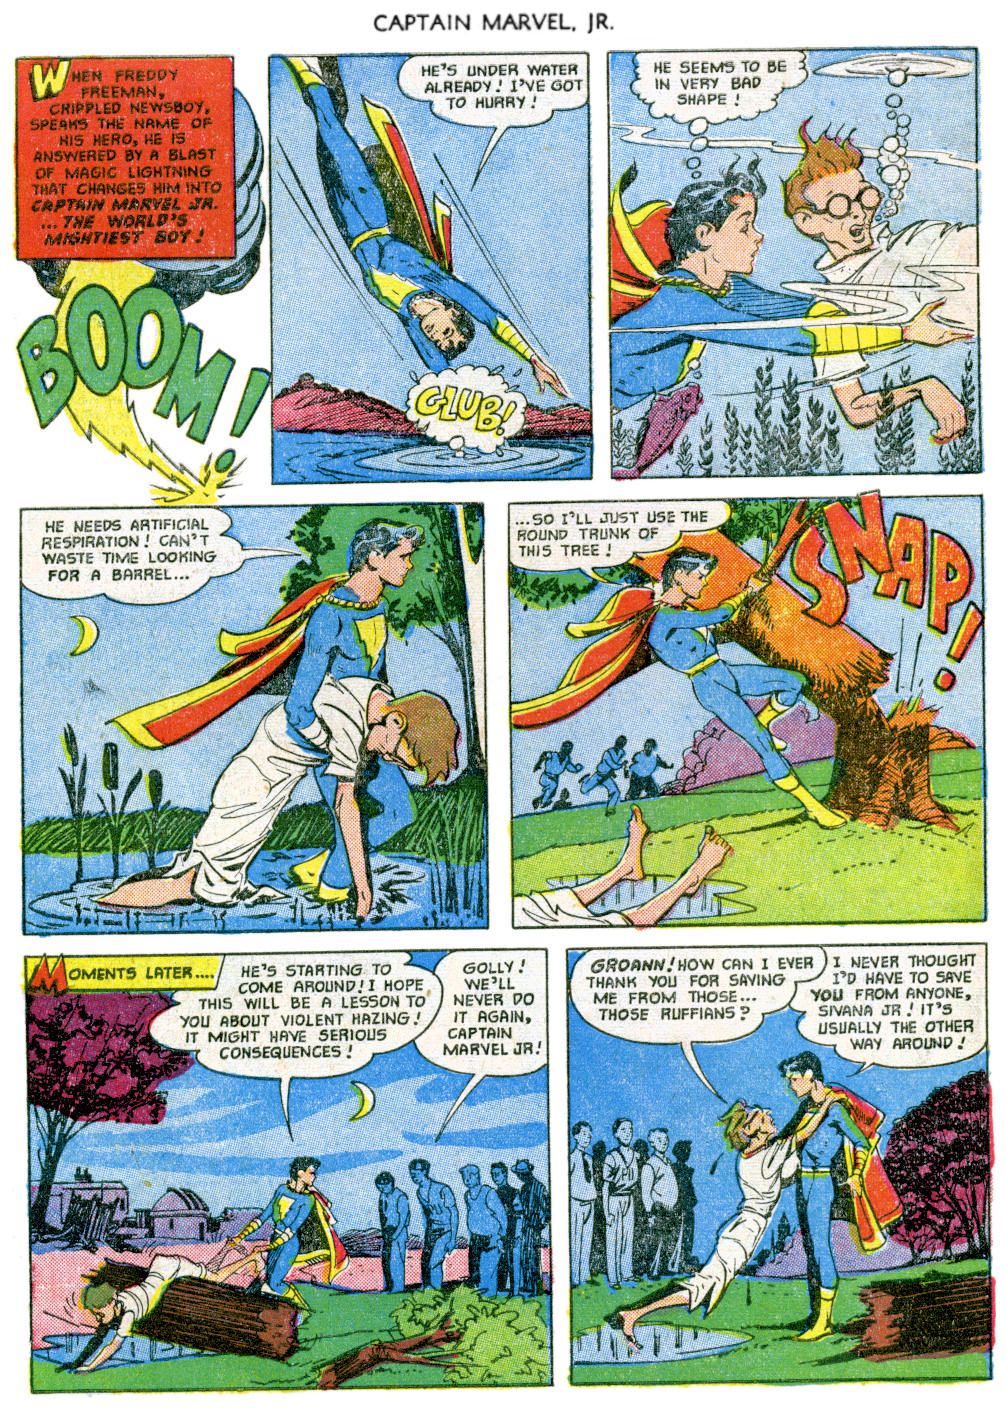 Read online Captain Marvel, Jr. comic -  Issue #100 - 6